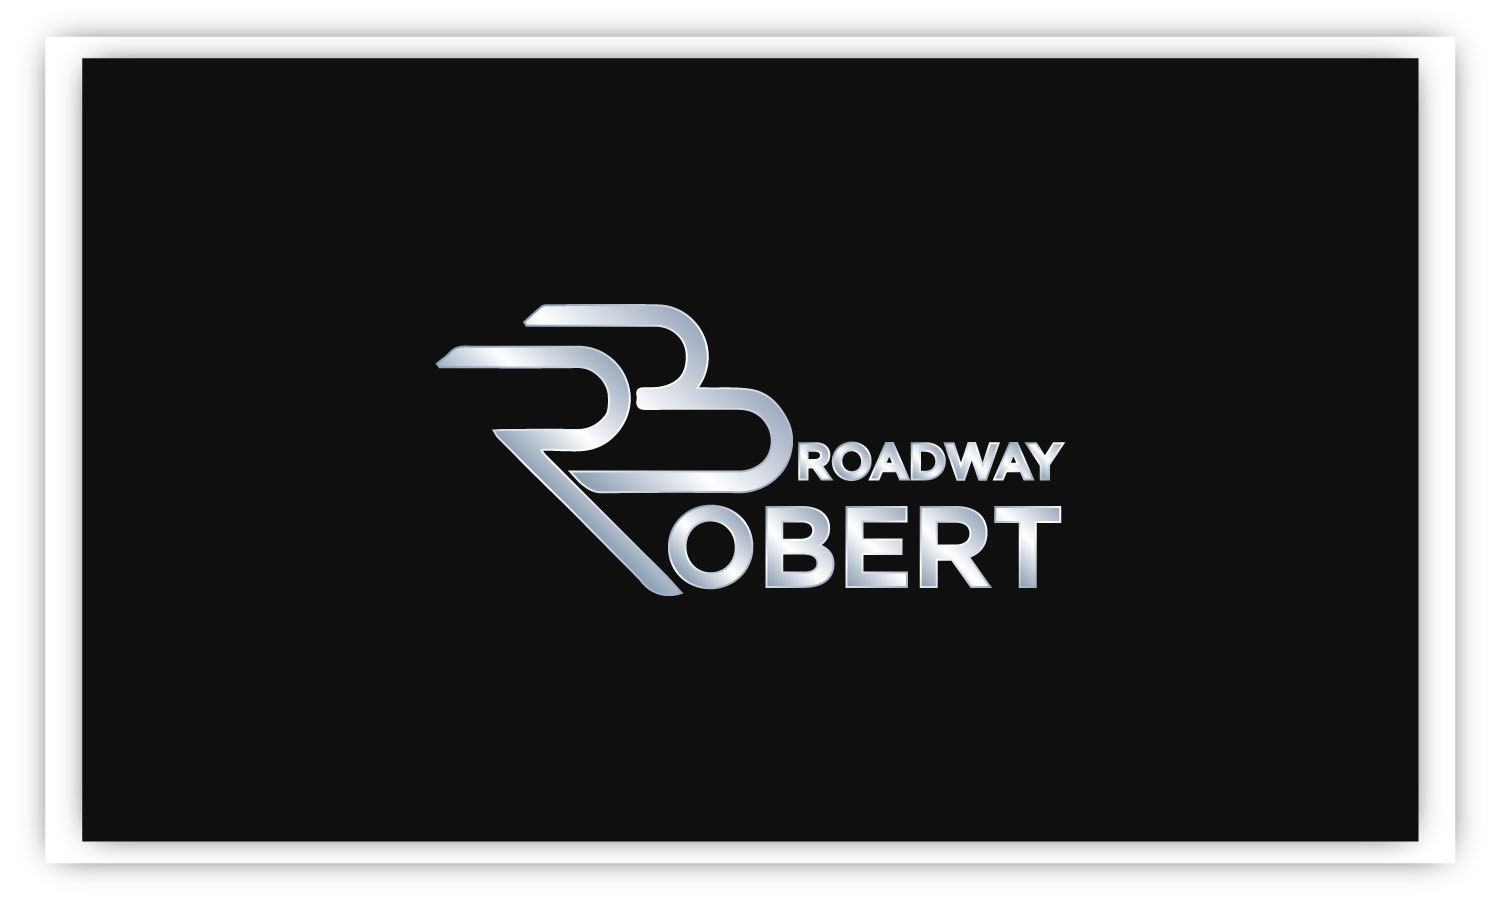 Robert Broadway